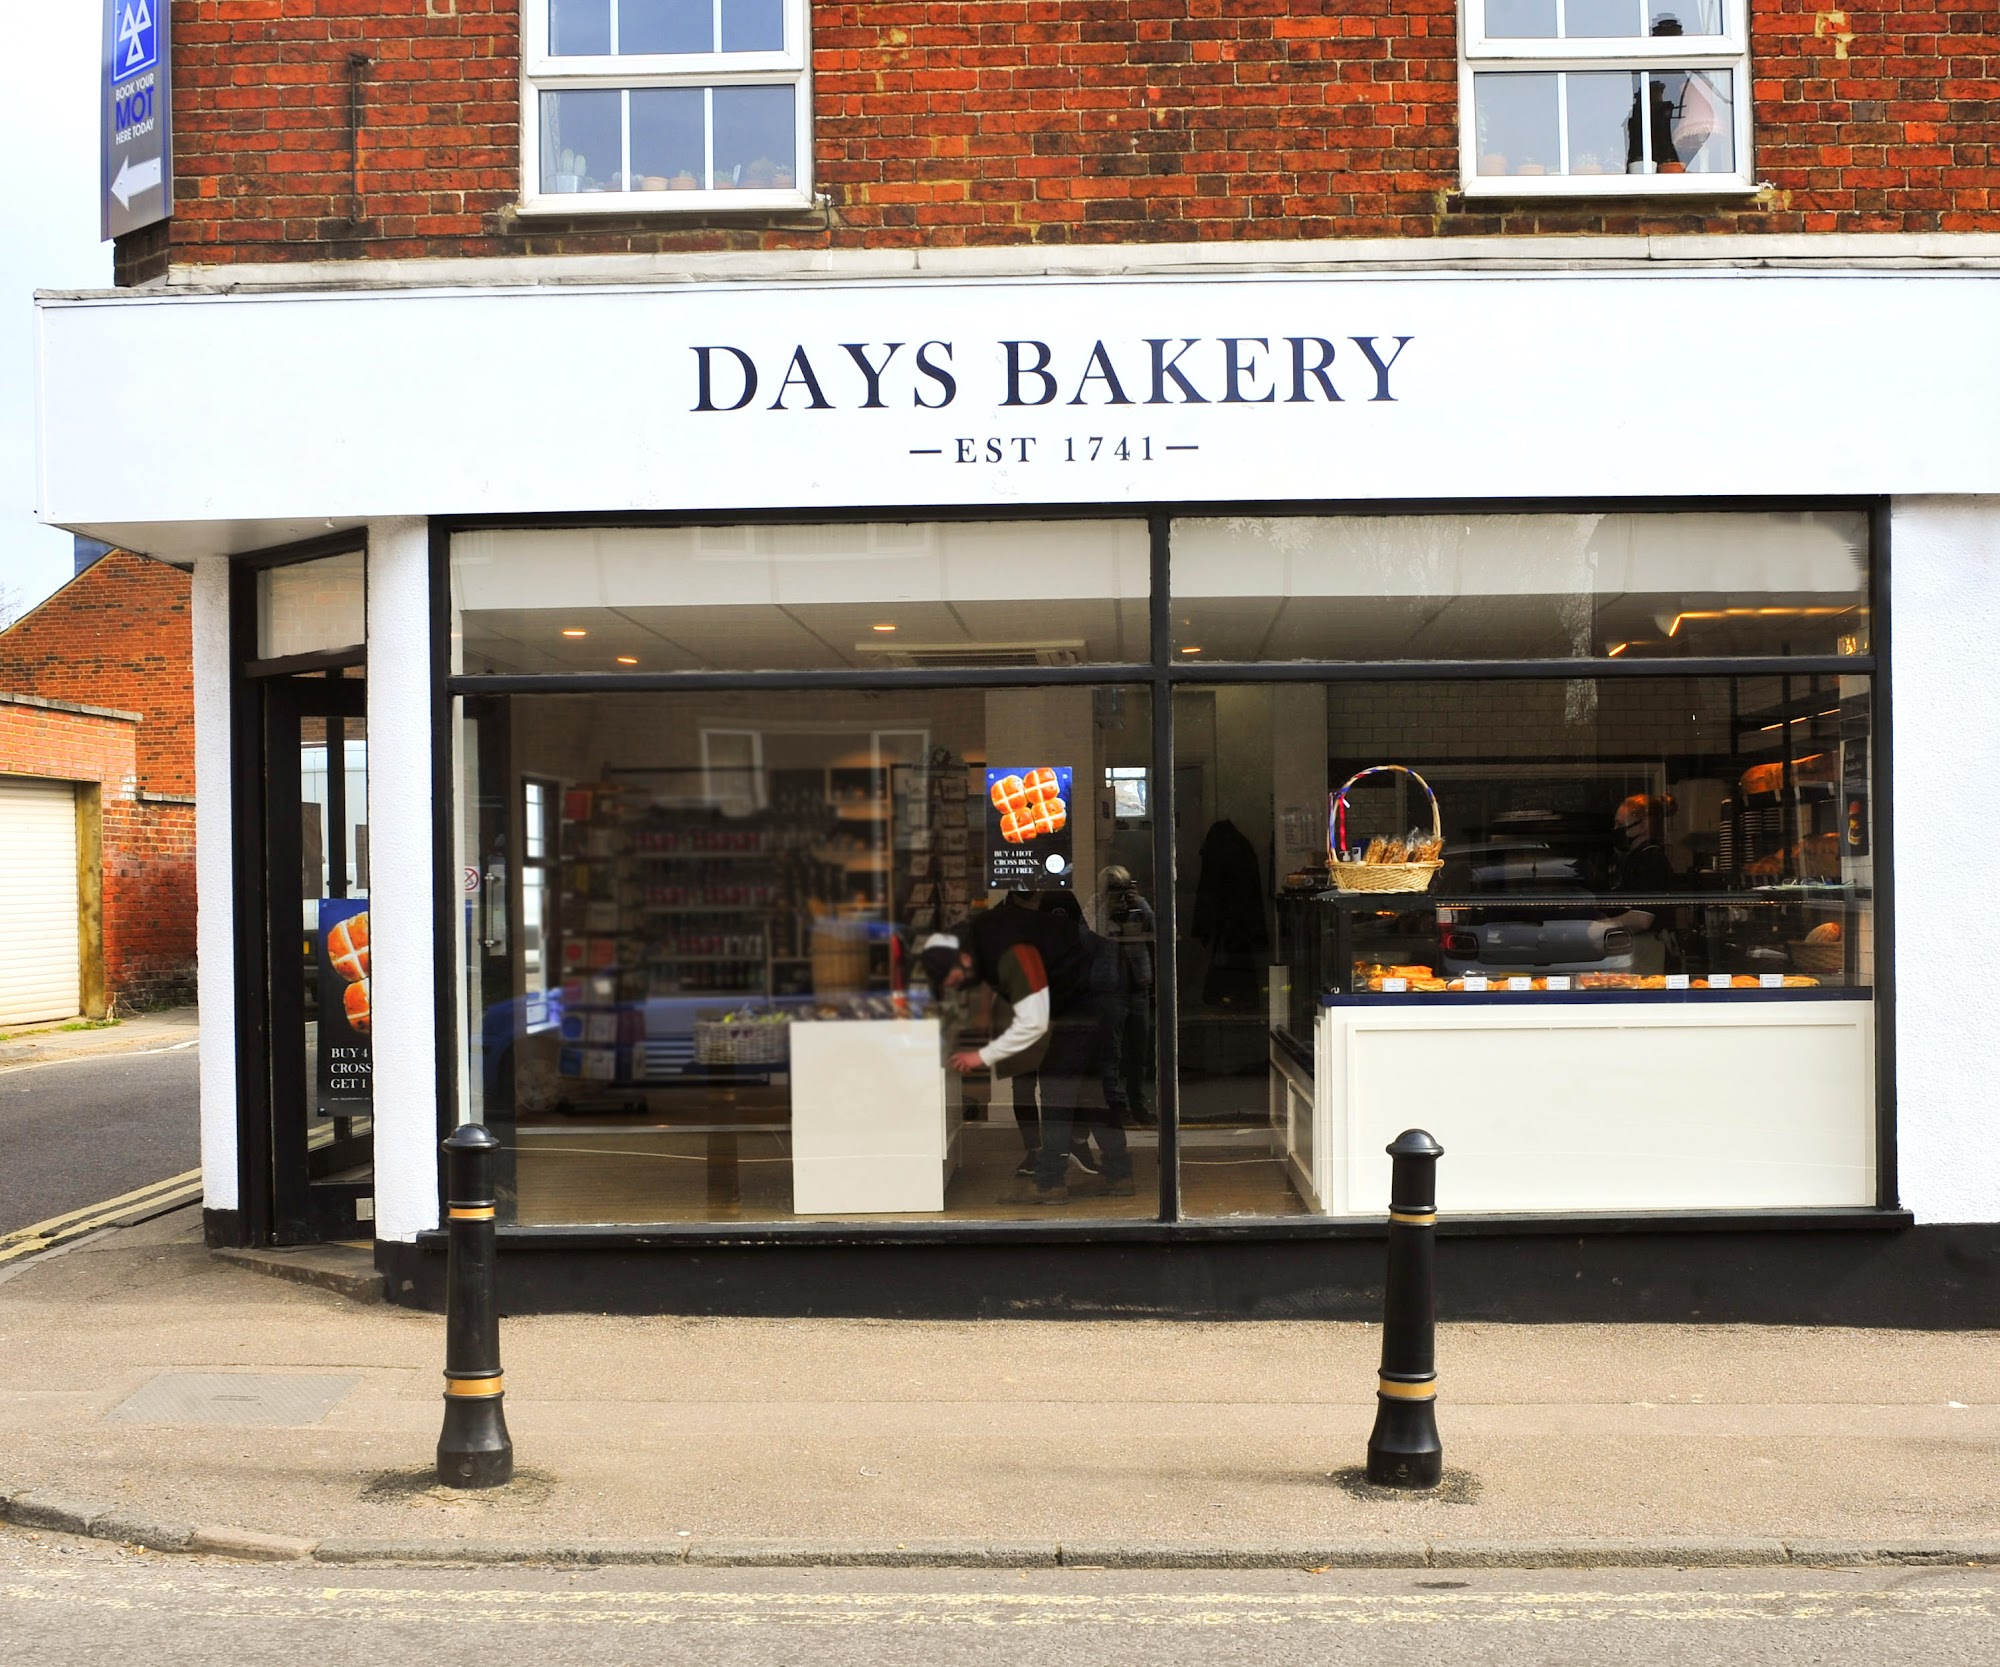 Days Bakery Deli & Bakery